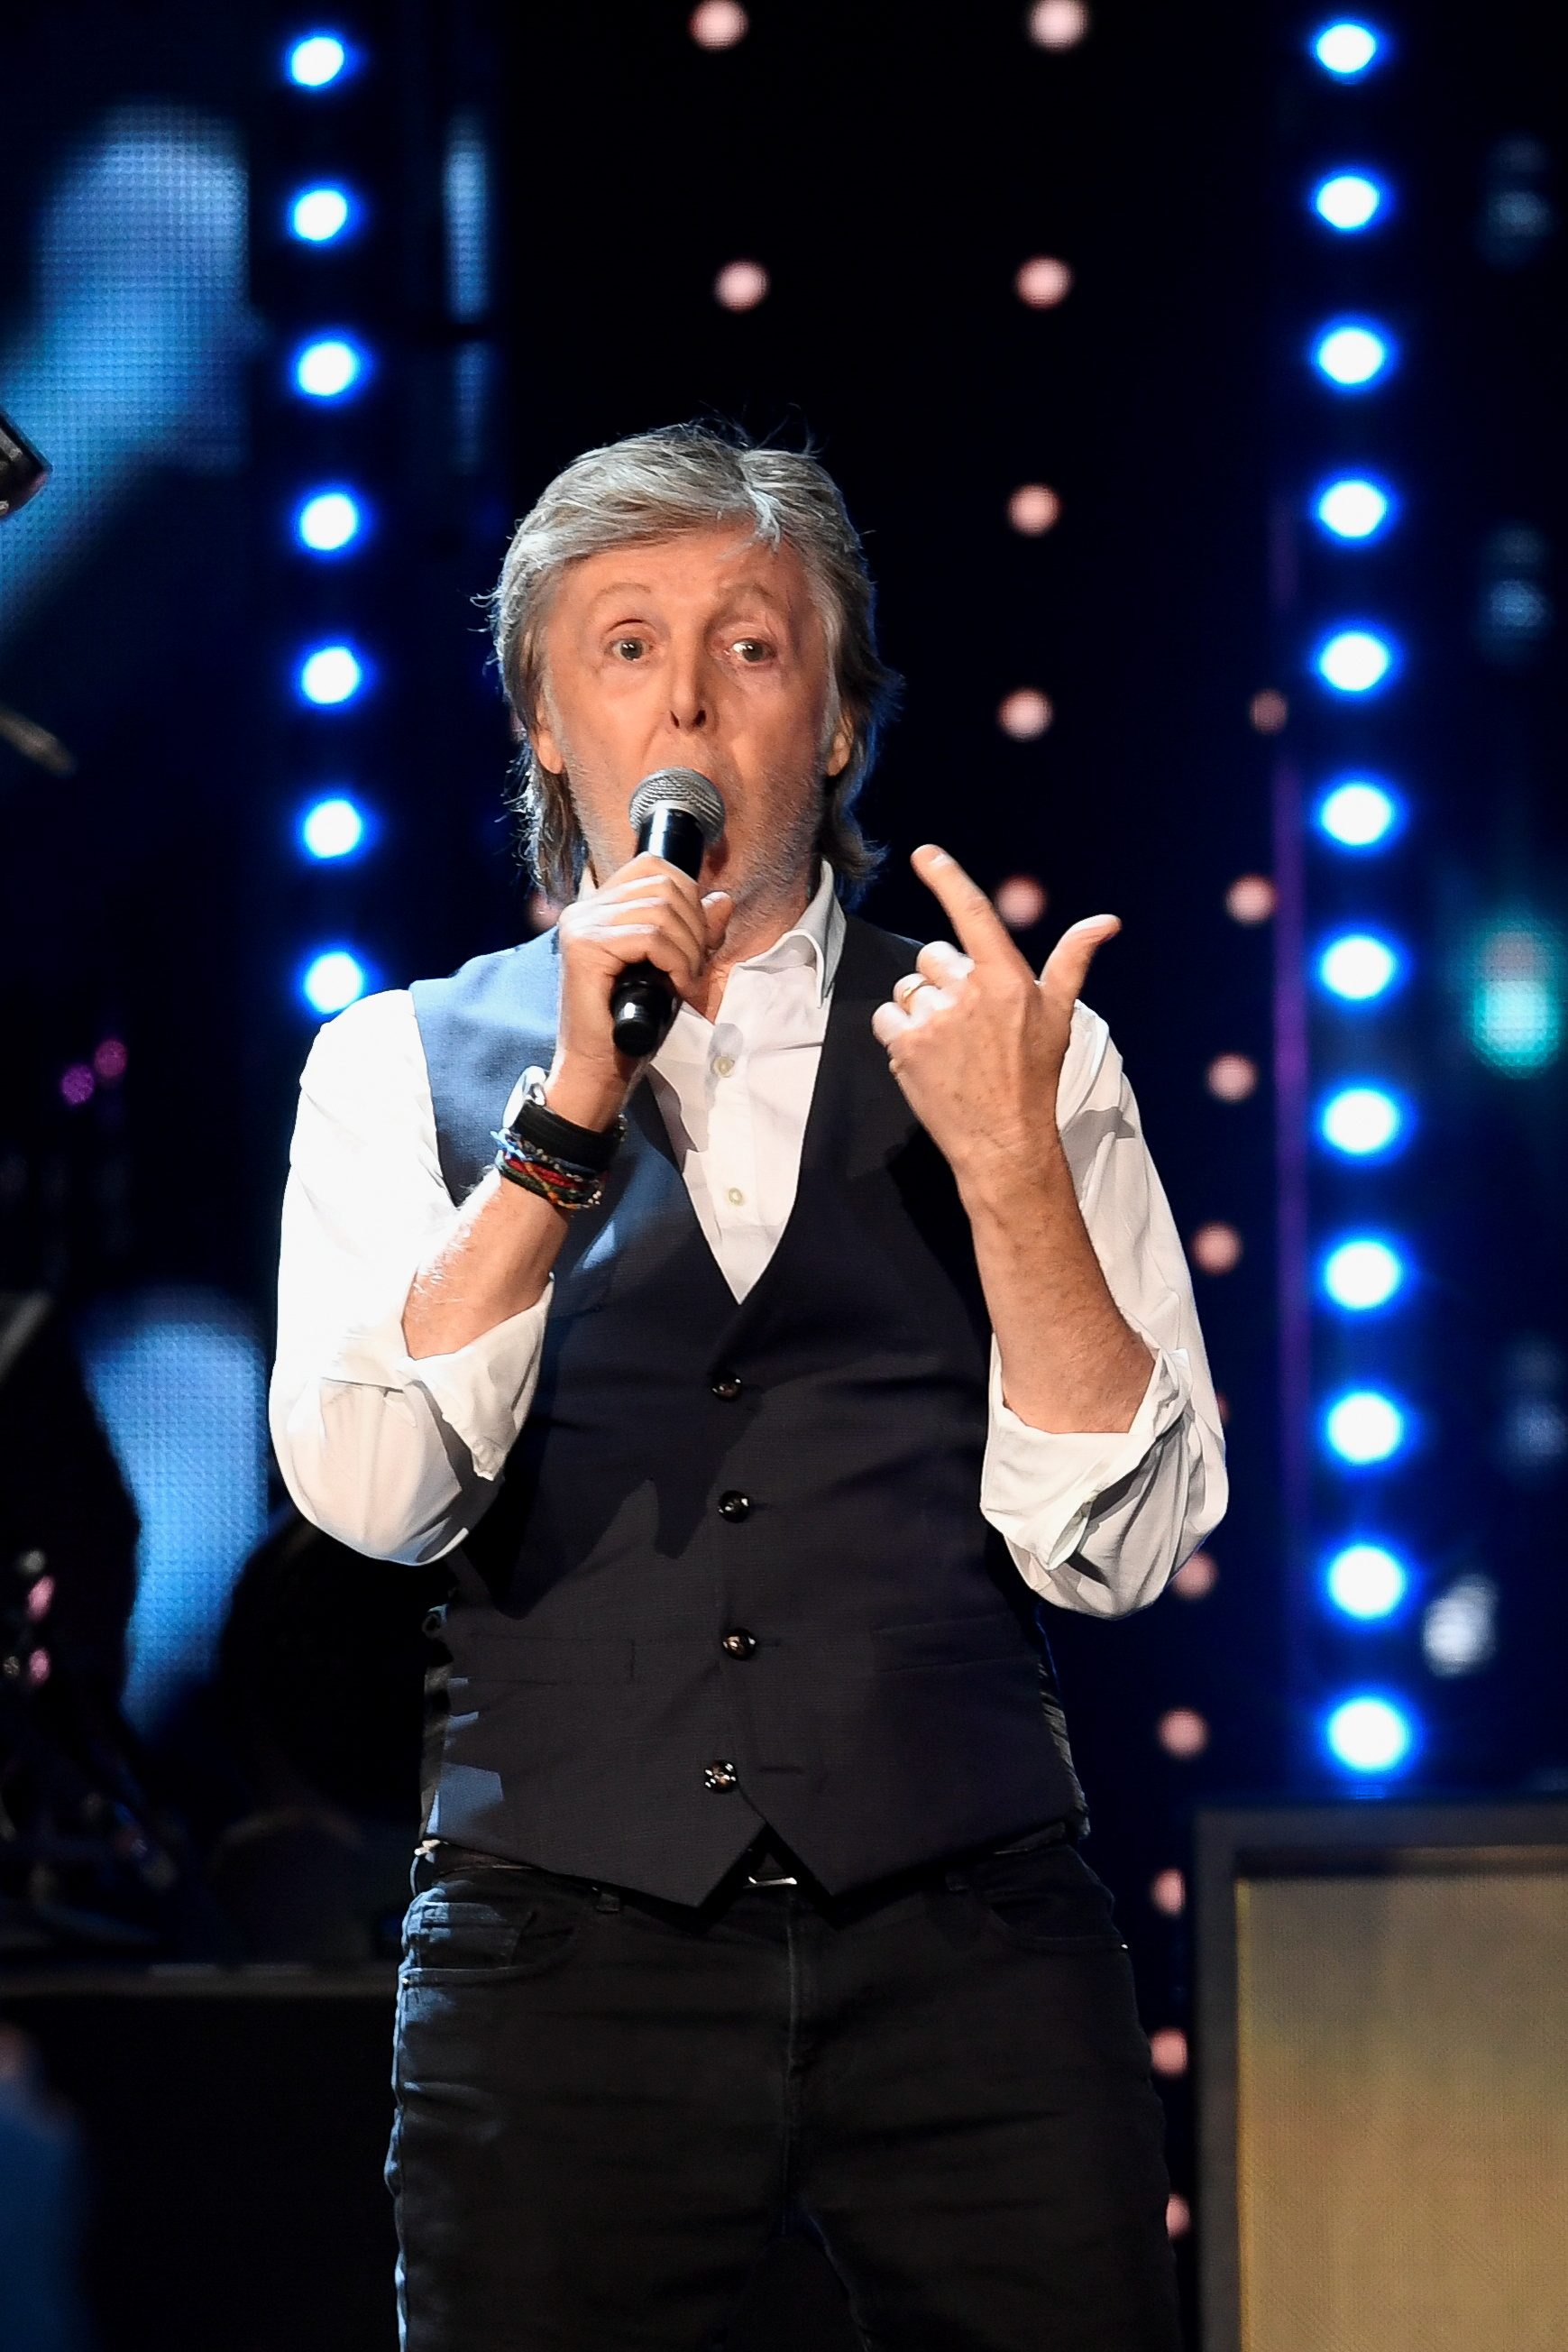 ‘A self-portrait in songs’: Paul McCartney looks back on his lyrics